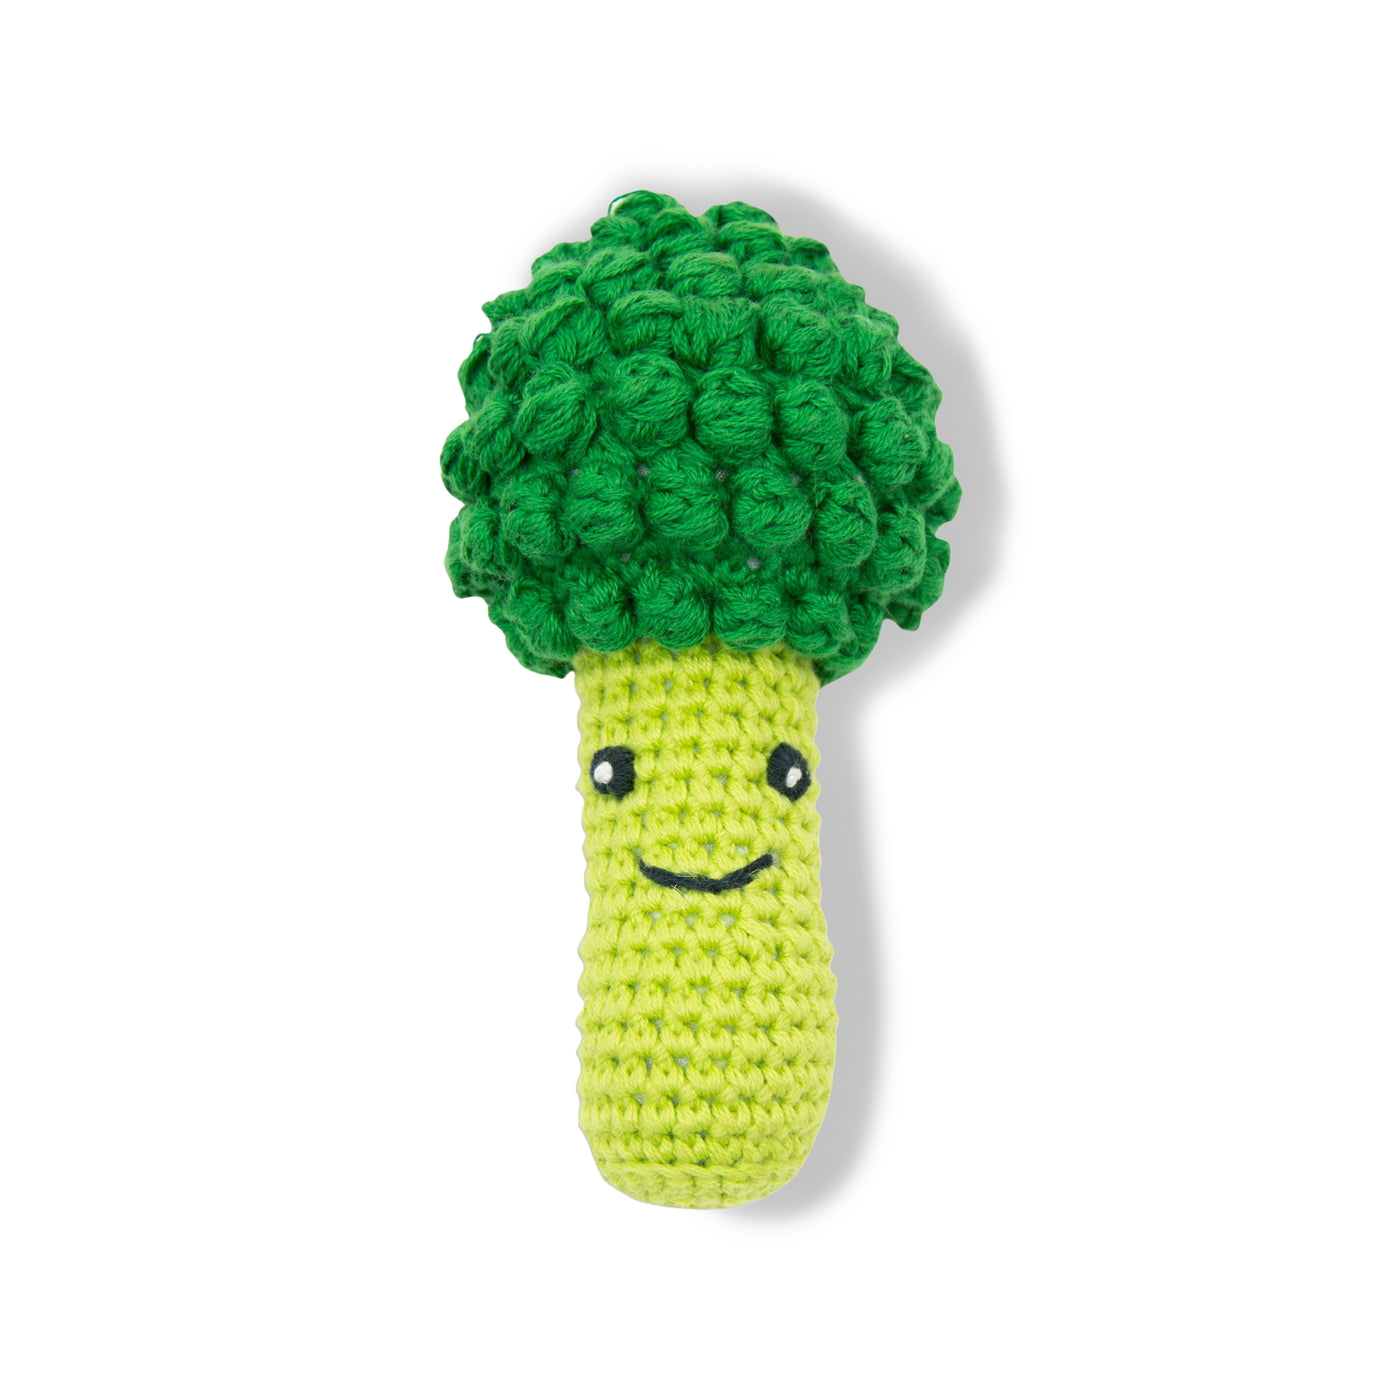 Crochet Rattle - Broccoli